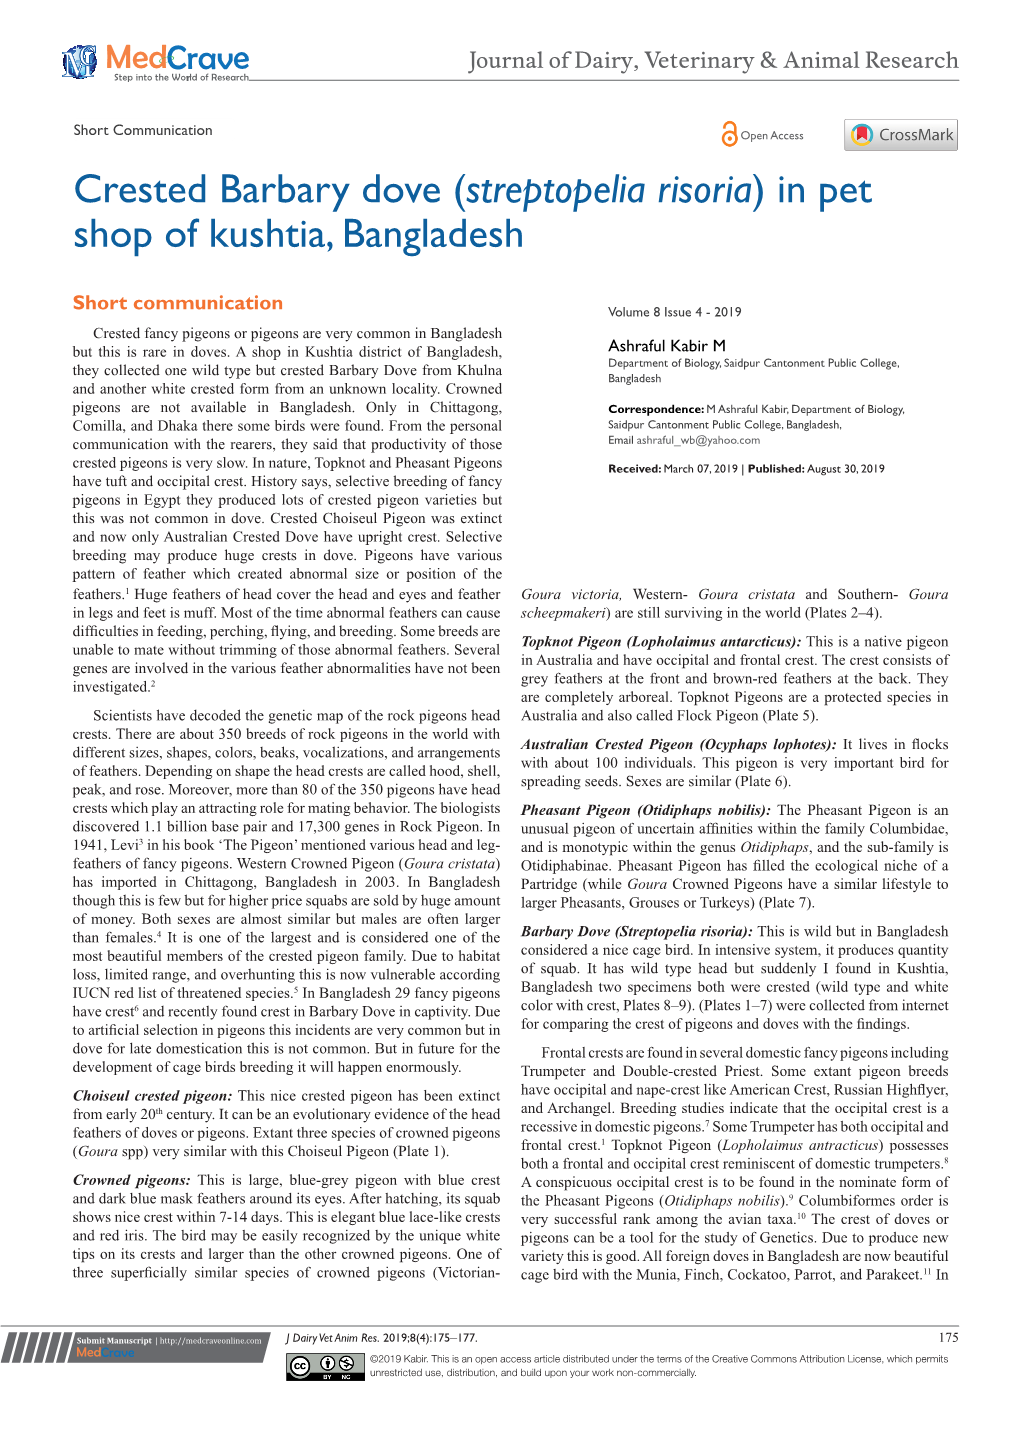 Crested Barbary Dove (Streptopelia Risoria) in Pet Shop of Kushtia, Bangladesh